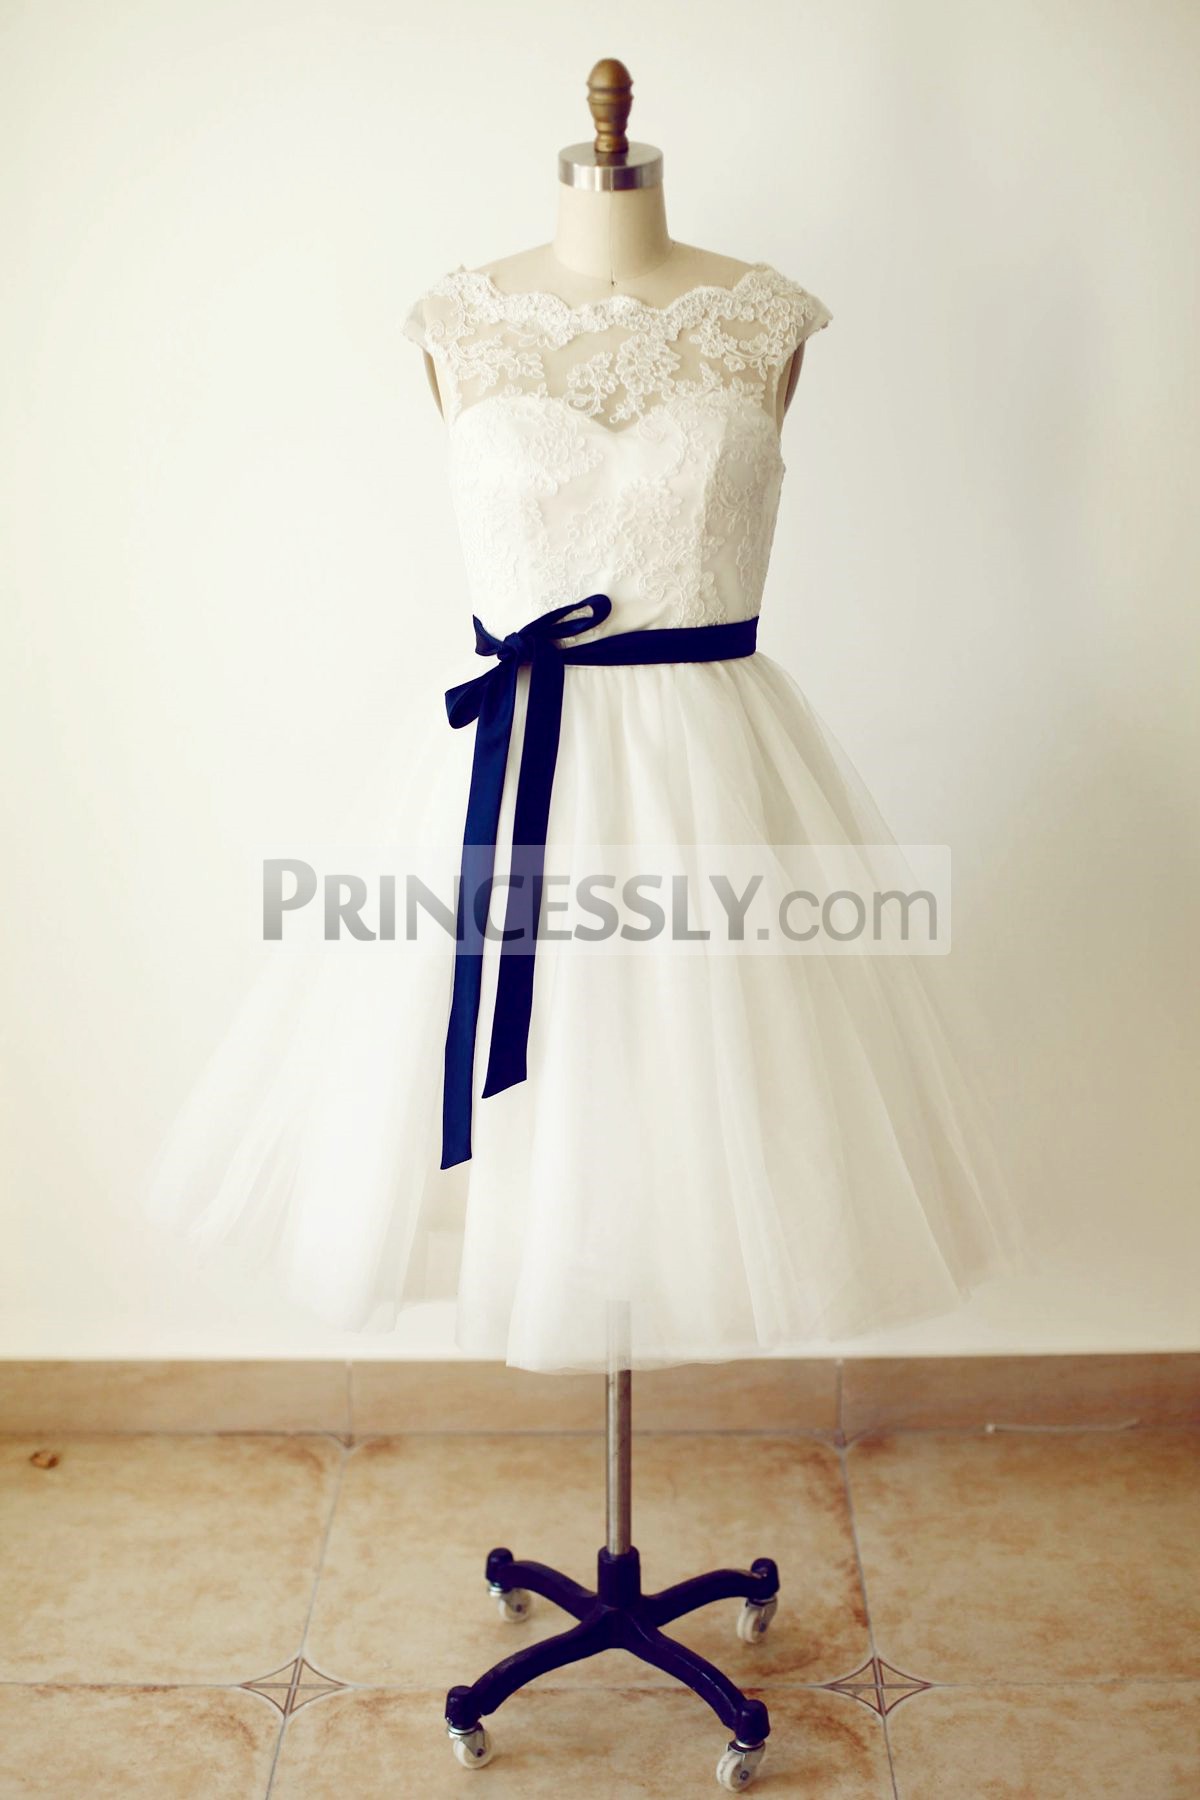 Princessly.com-K1000229-Lace Tulle Short Bridesmaid Dress with navy blue sash-31